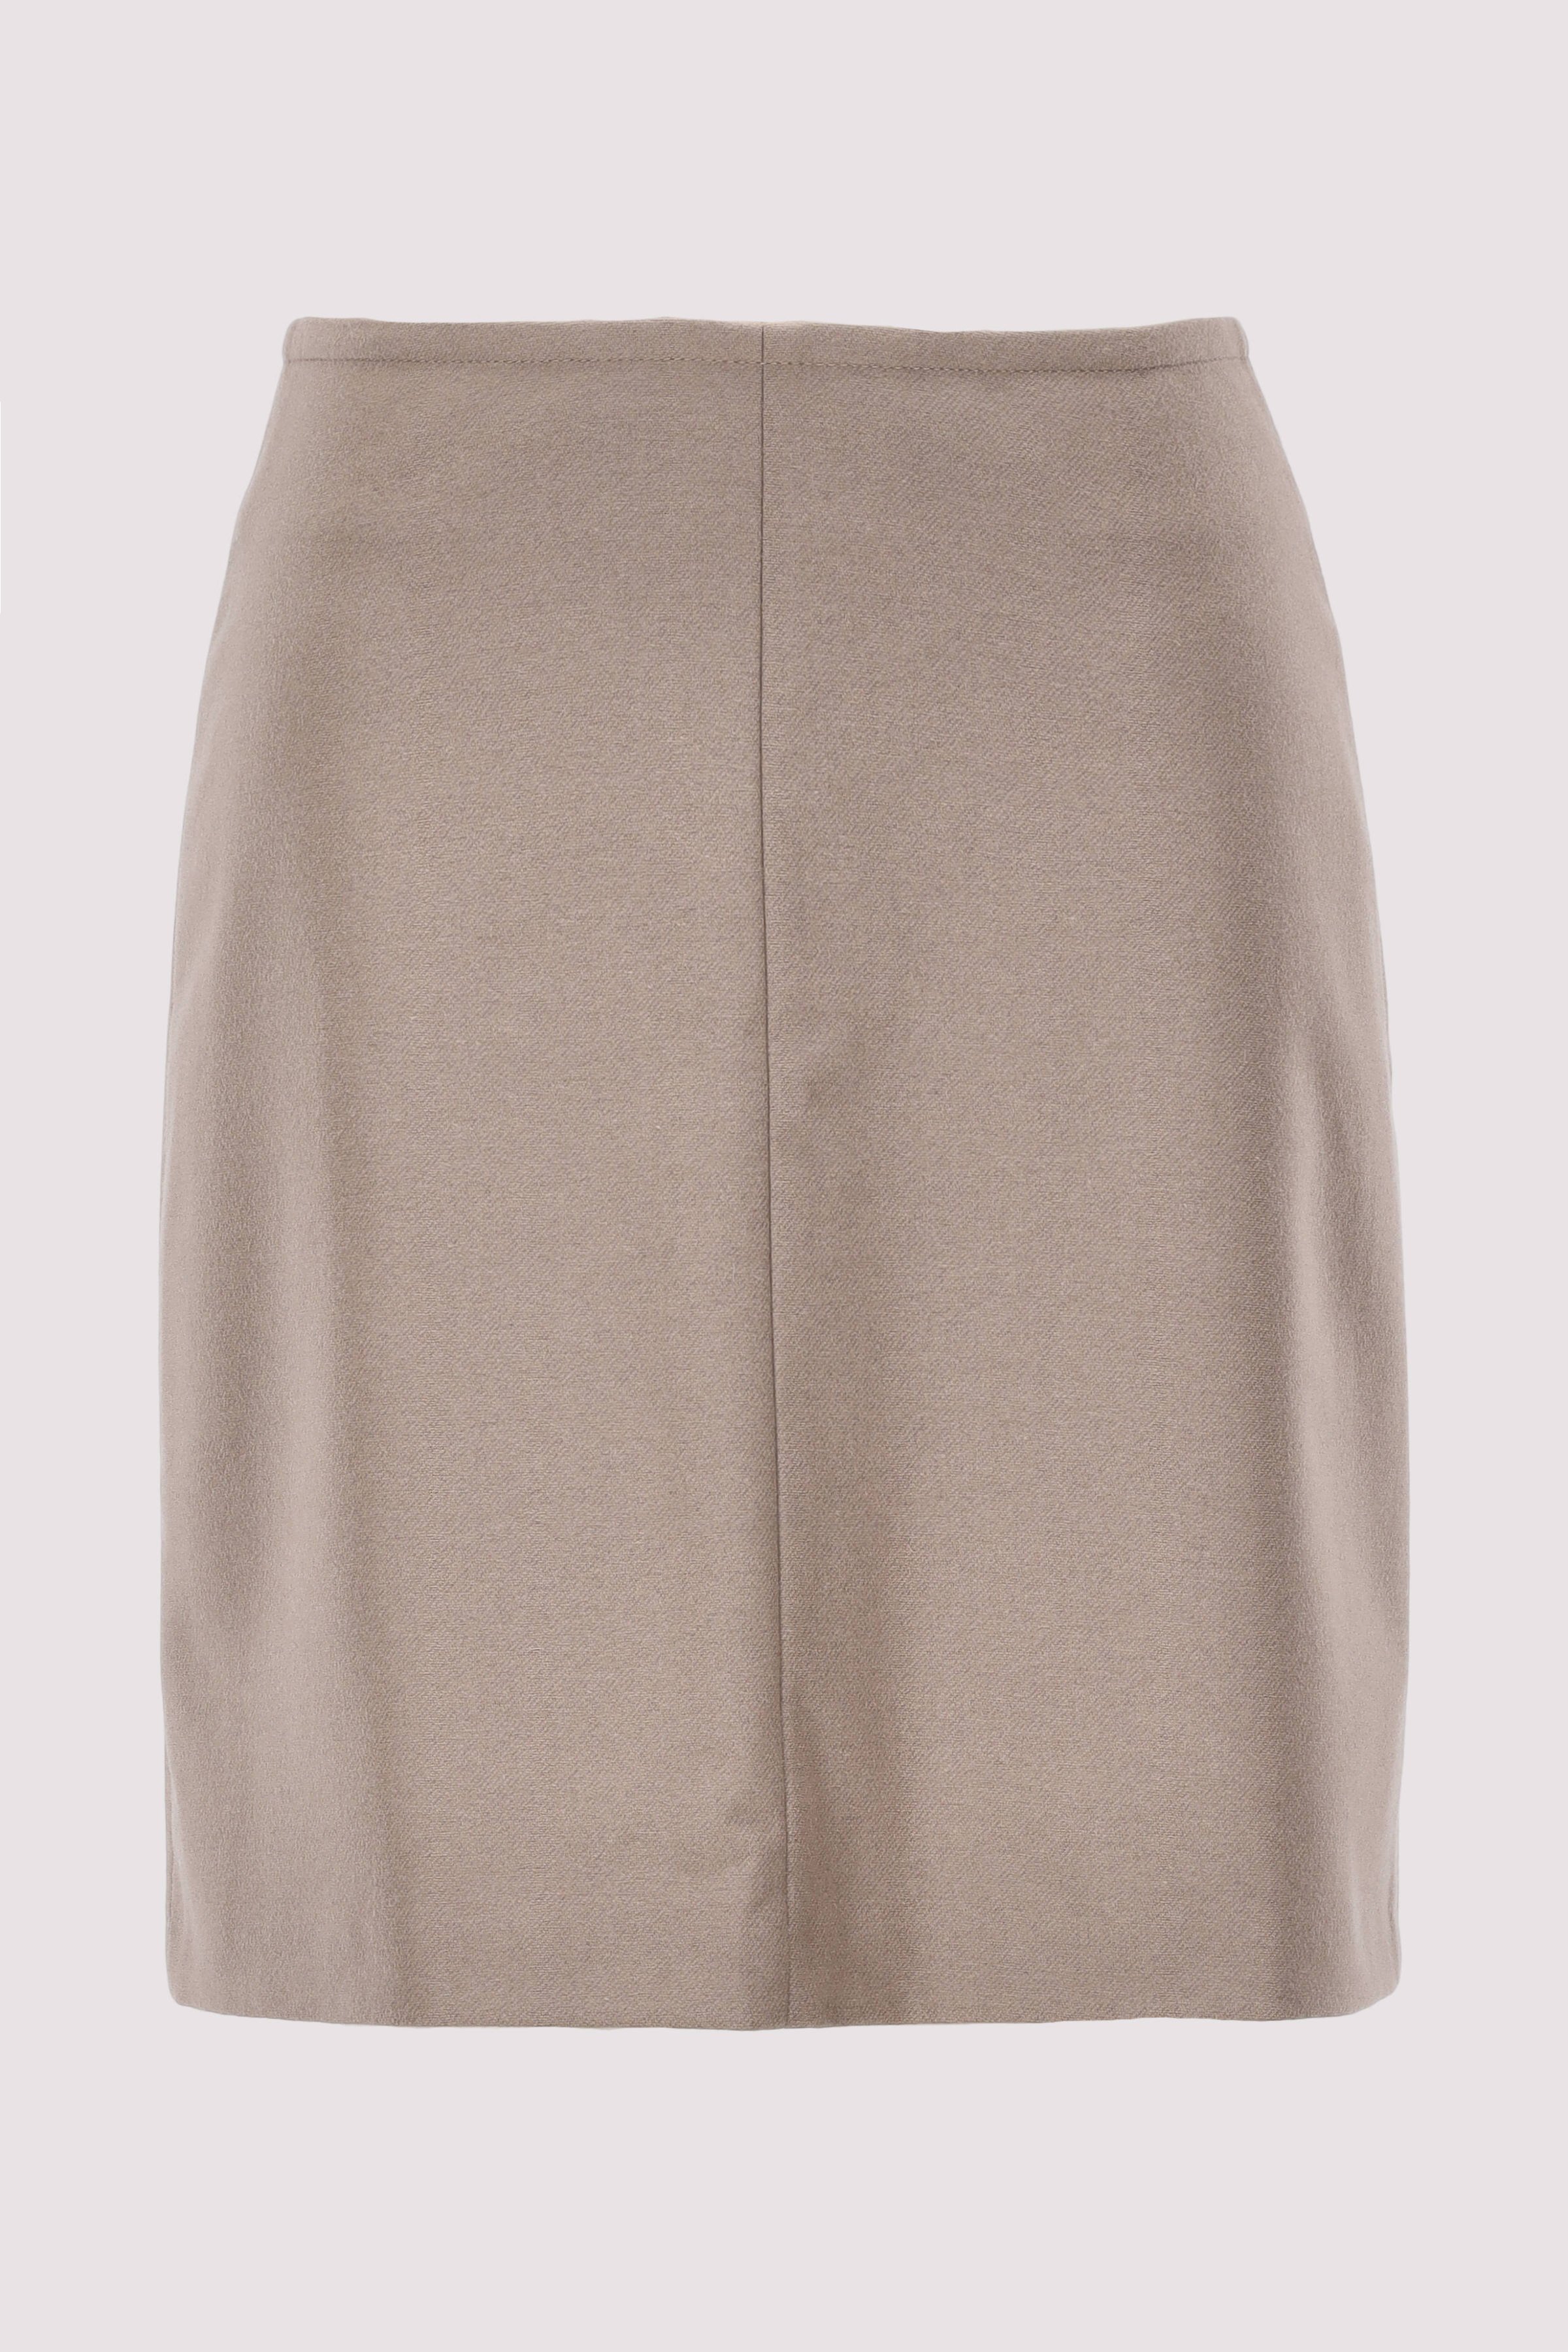 Mini skirt, A-shape, high wais